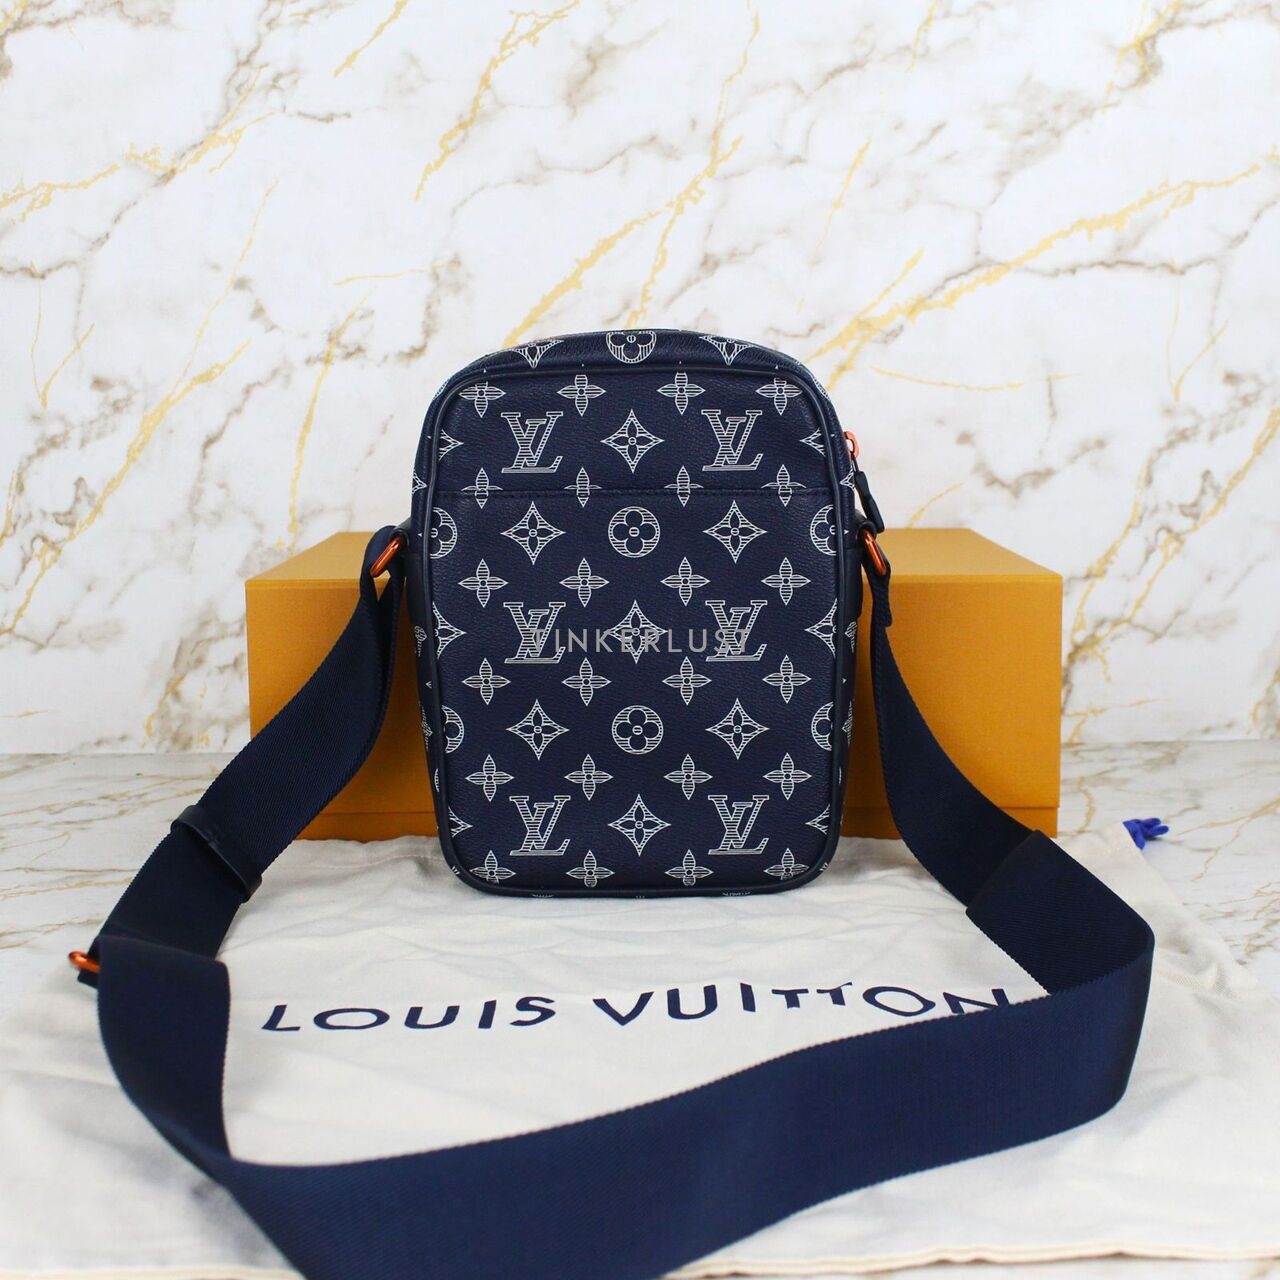 Louis Vuitton Kim Jones Upside Down Sling Bag